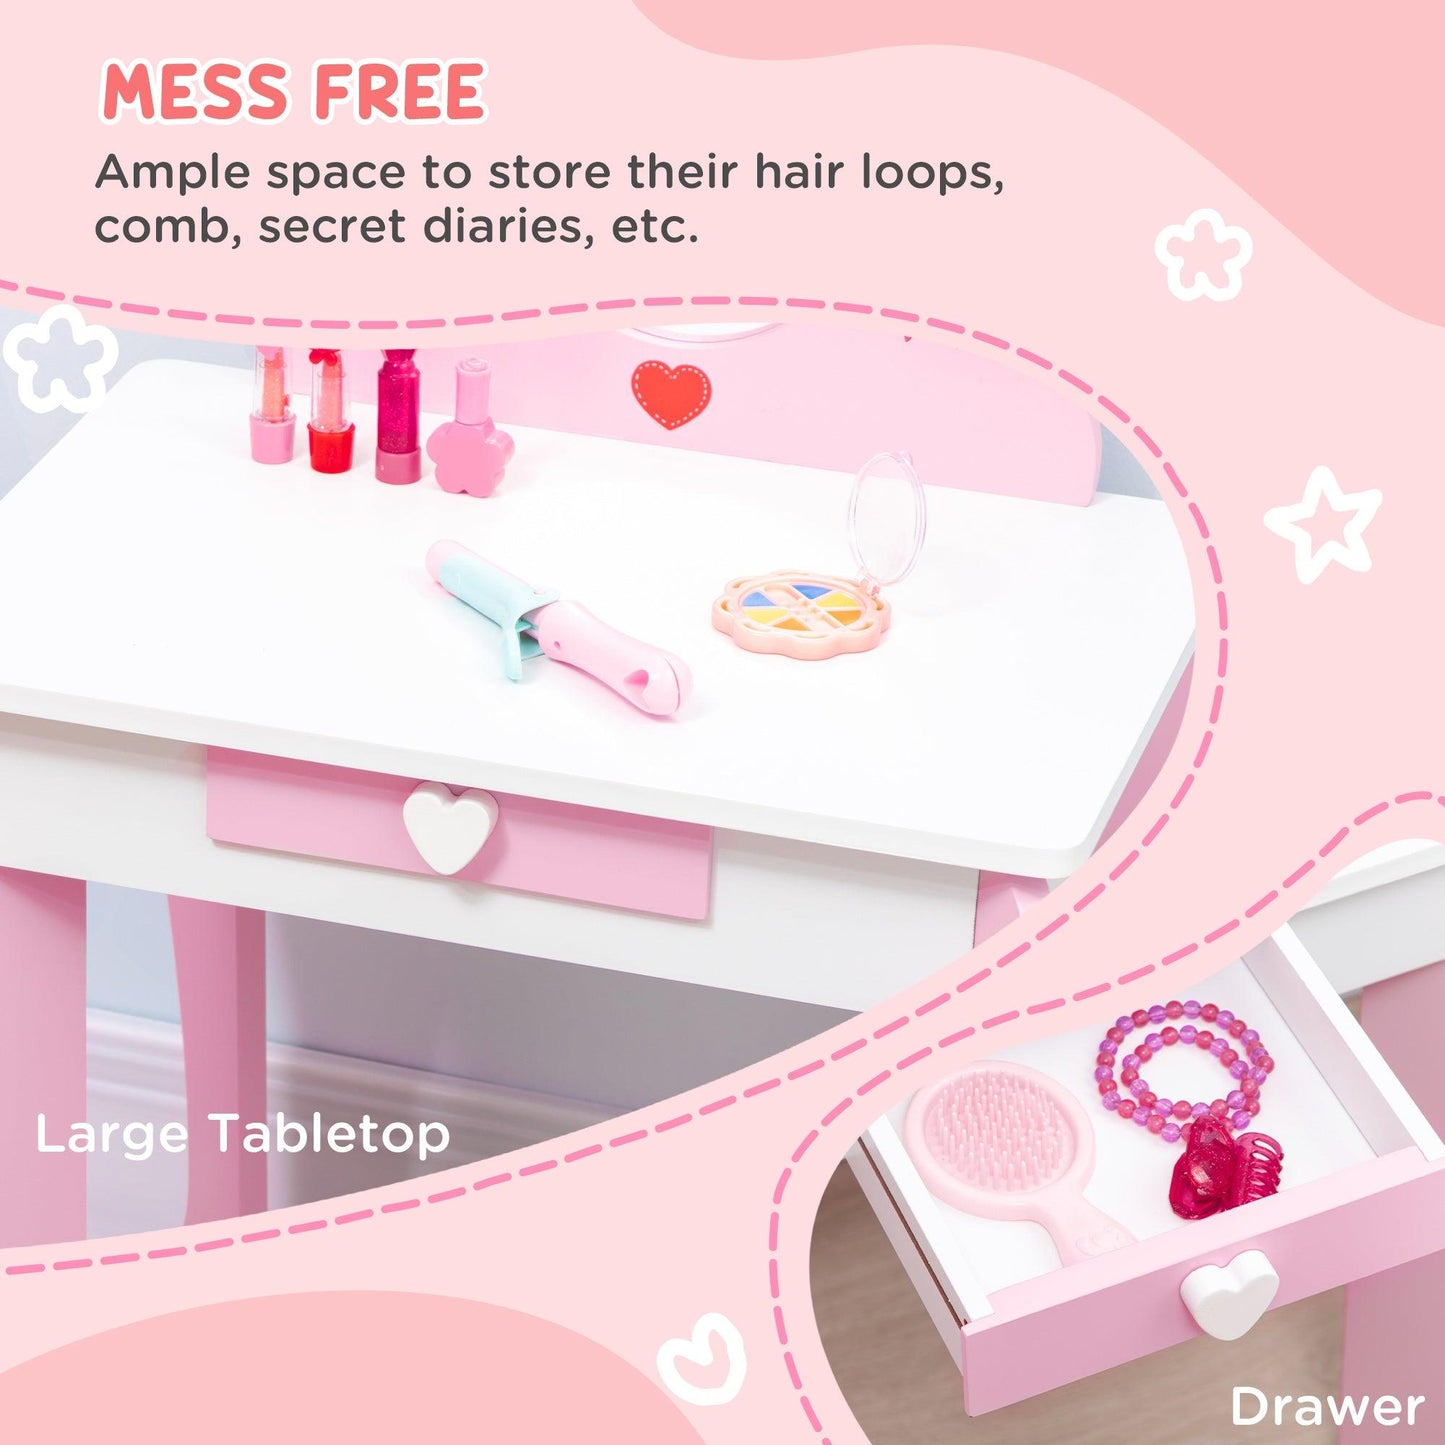 ZONEKIZ 4PCs Kids Bedroom Furniture Set W/ Bed, Toy Box Bench, Dressing Table, Pink